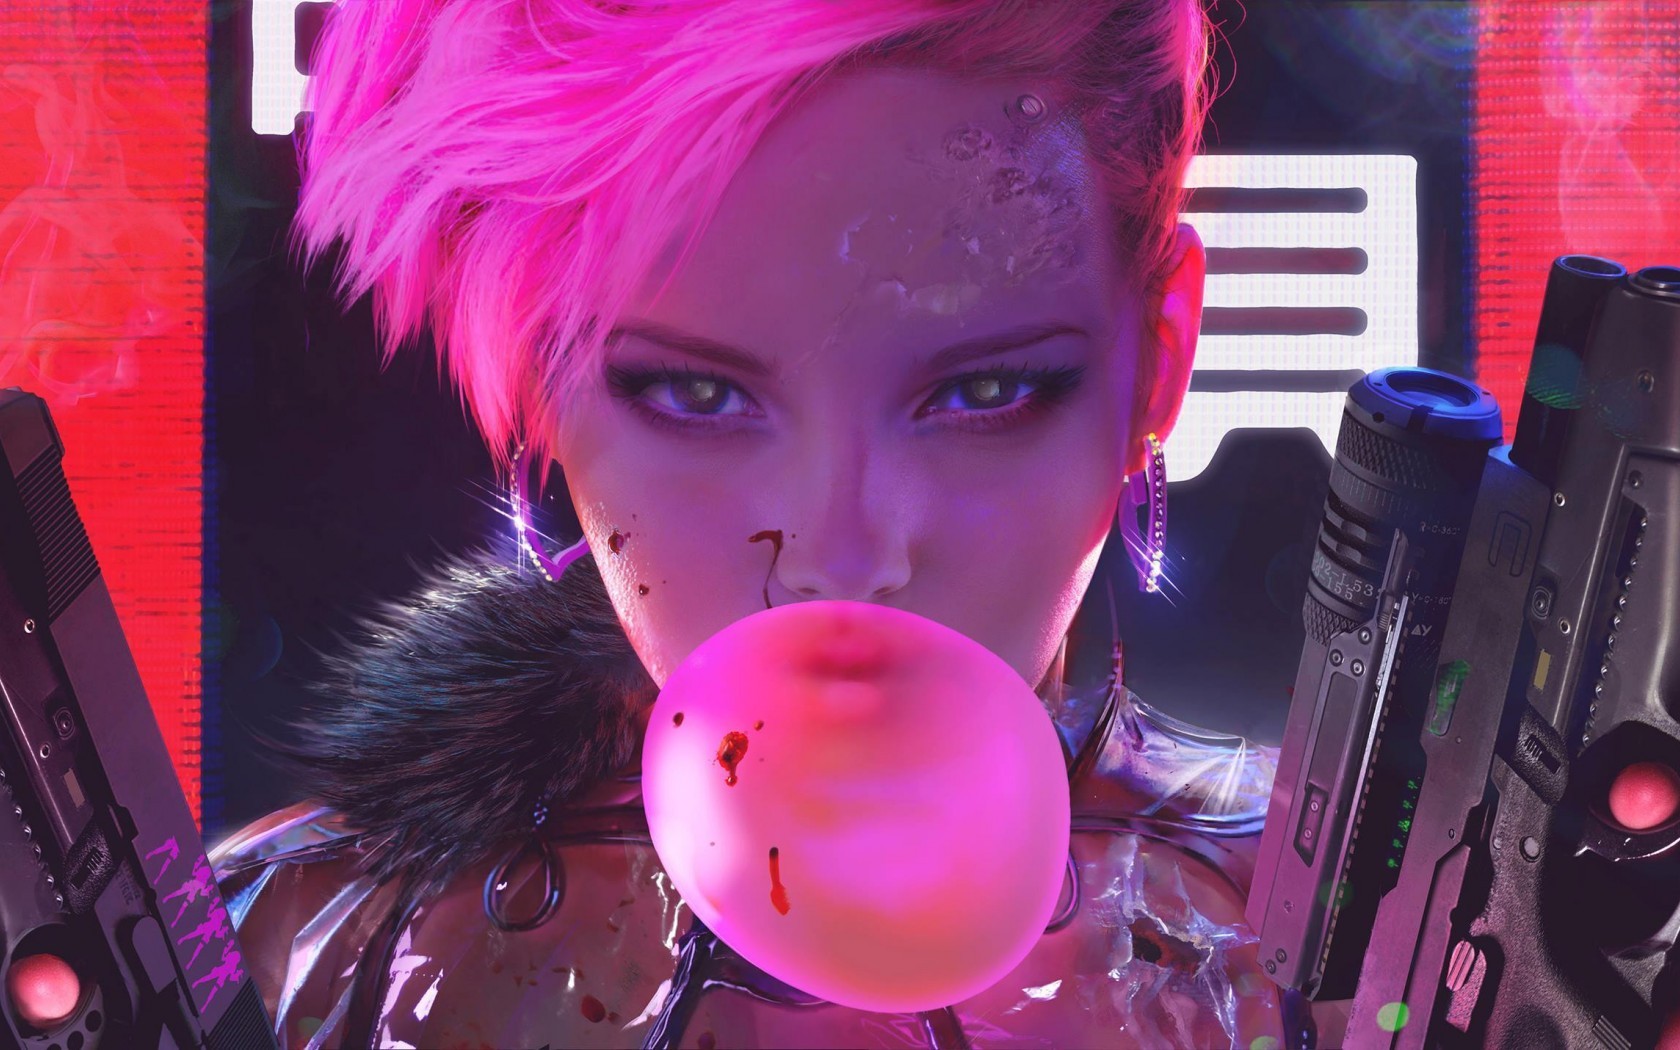 General 1680x1050 cyberpunk futuristic girls with guns science fiction women DeviantArt face pink hair closeup food sweets bubble gum gun weapon short hair looking at viewer